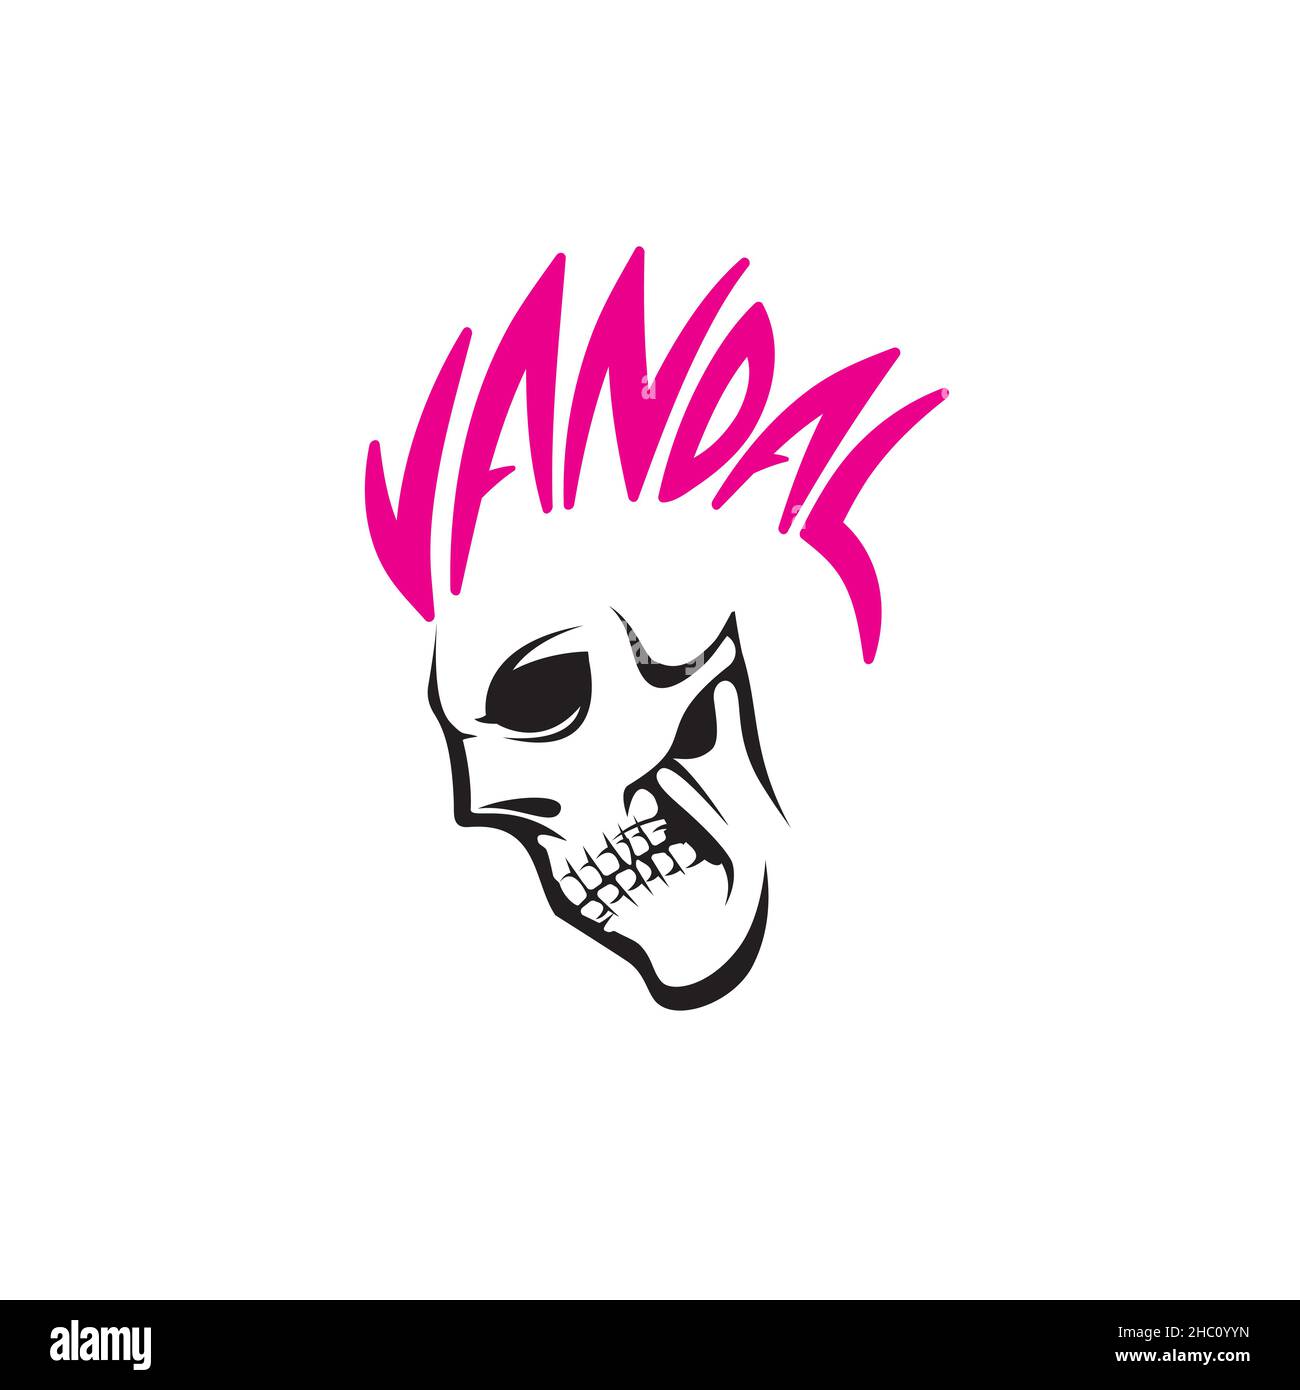 Vandal Skull vector illustration. for tshirt printing, logo, poster or any other purpose. Stock Vector